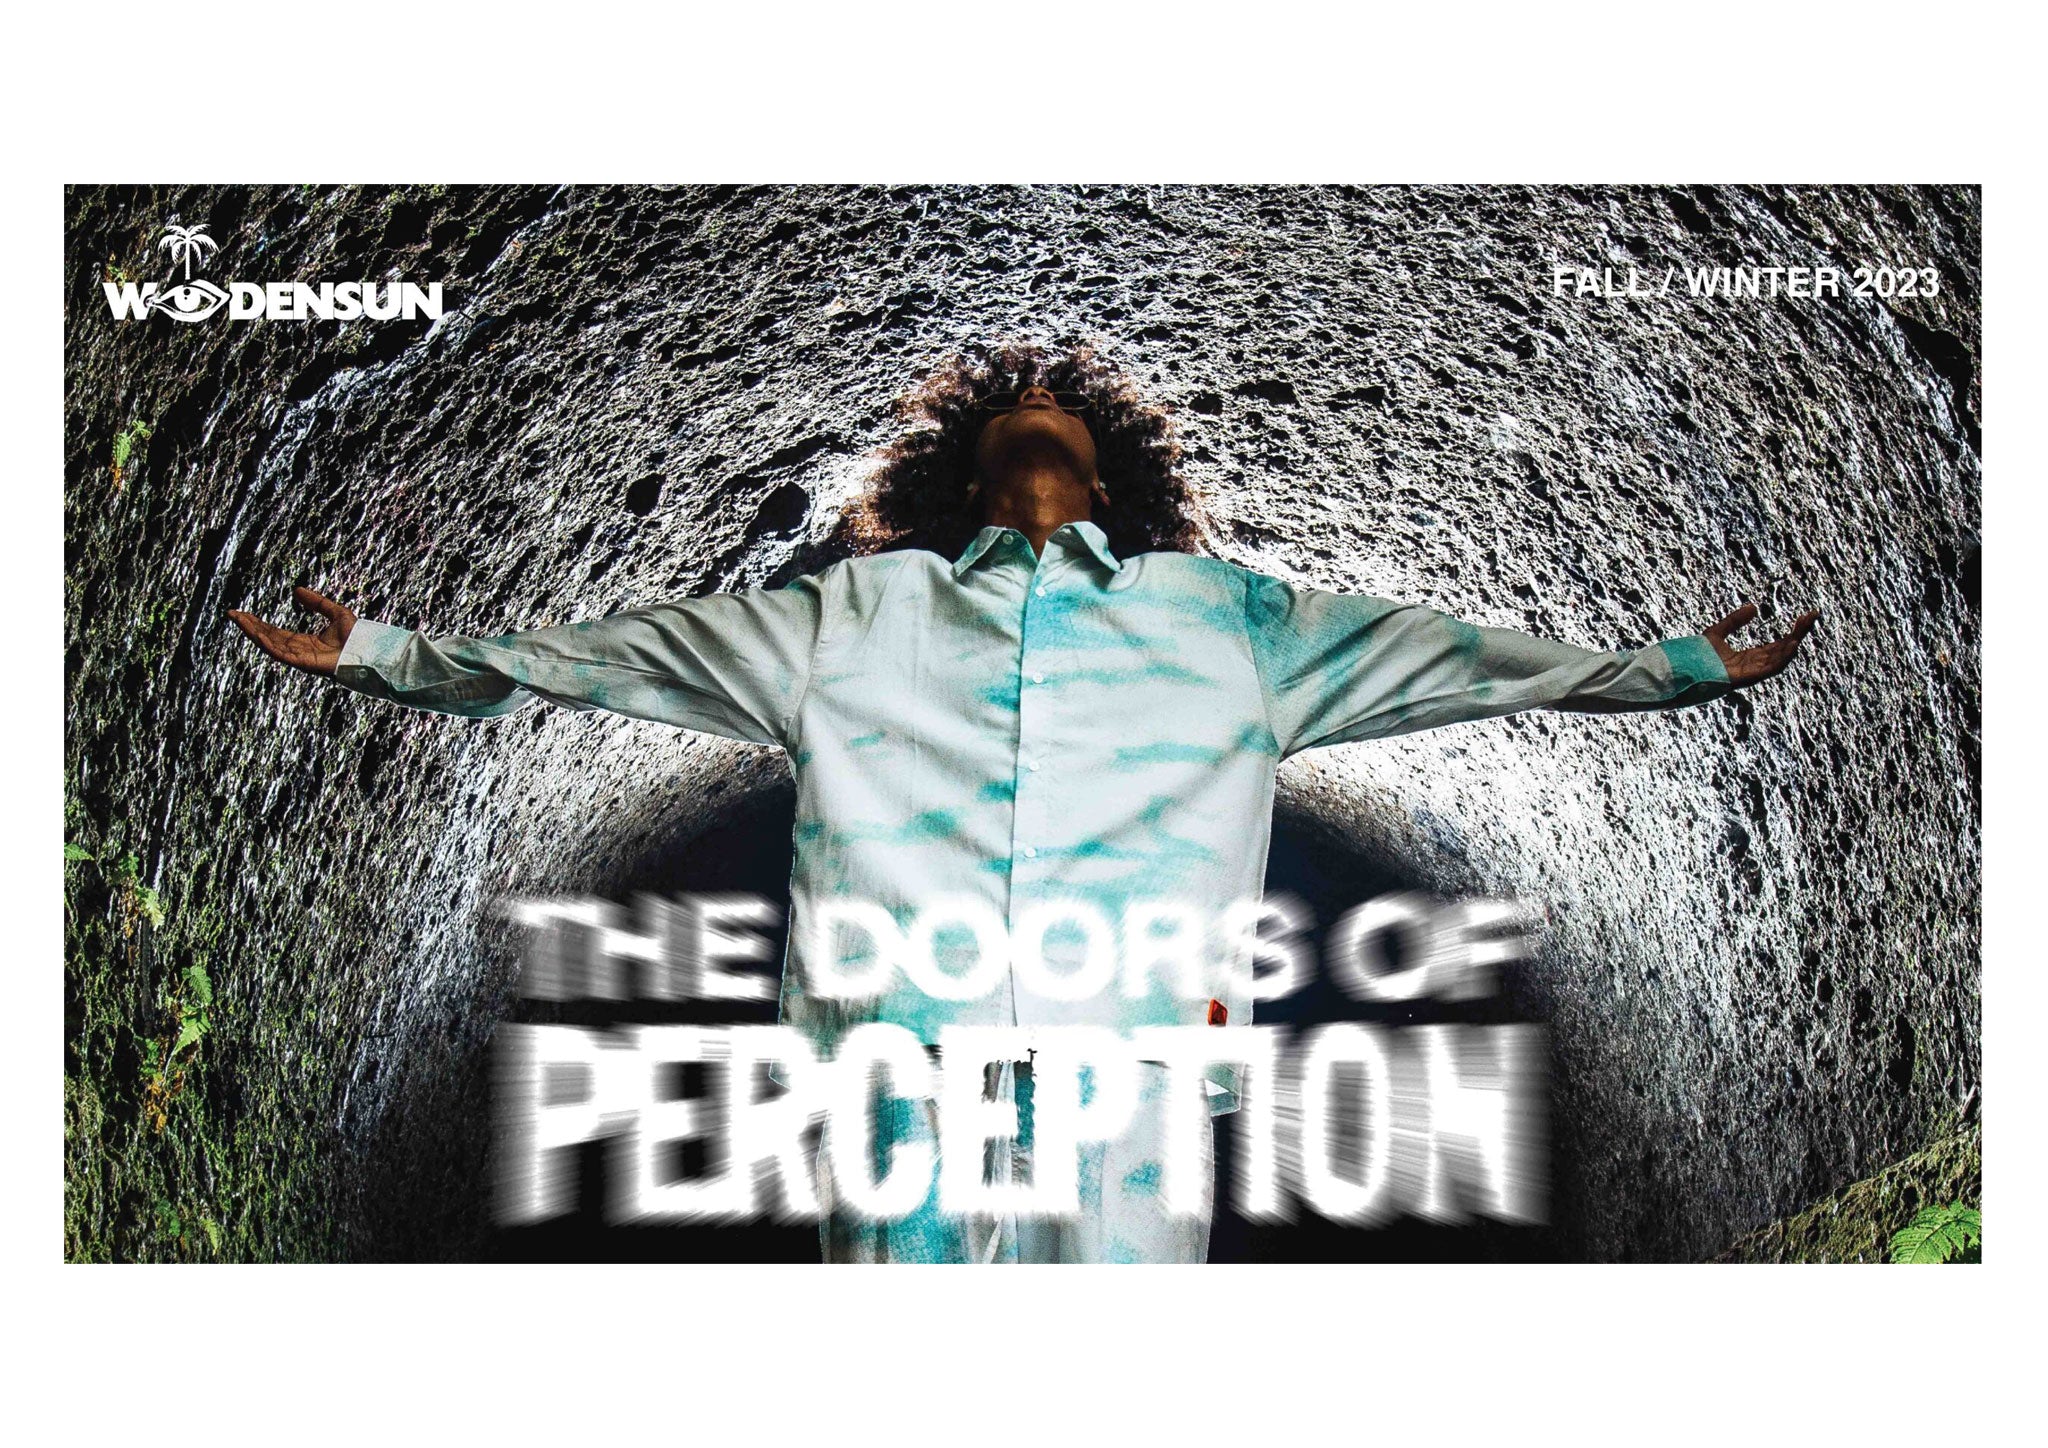 'The Doors of Perception' Fall/Winter 2023